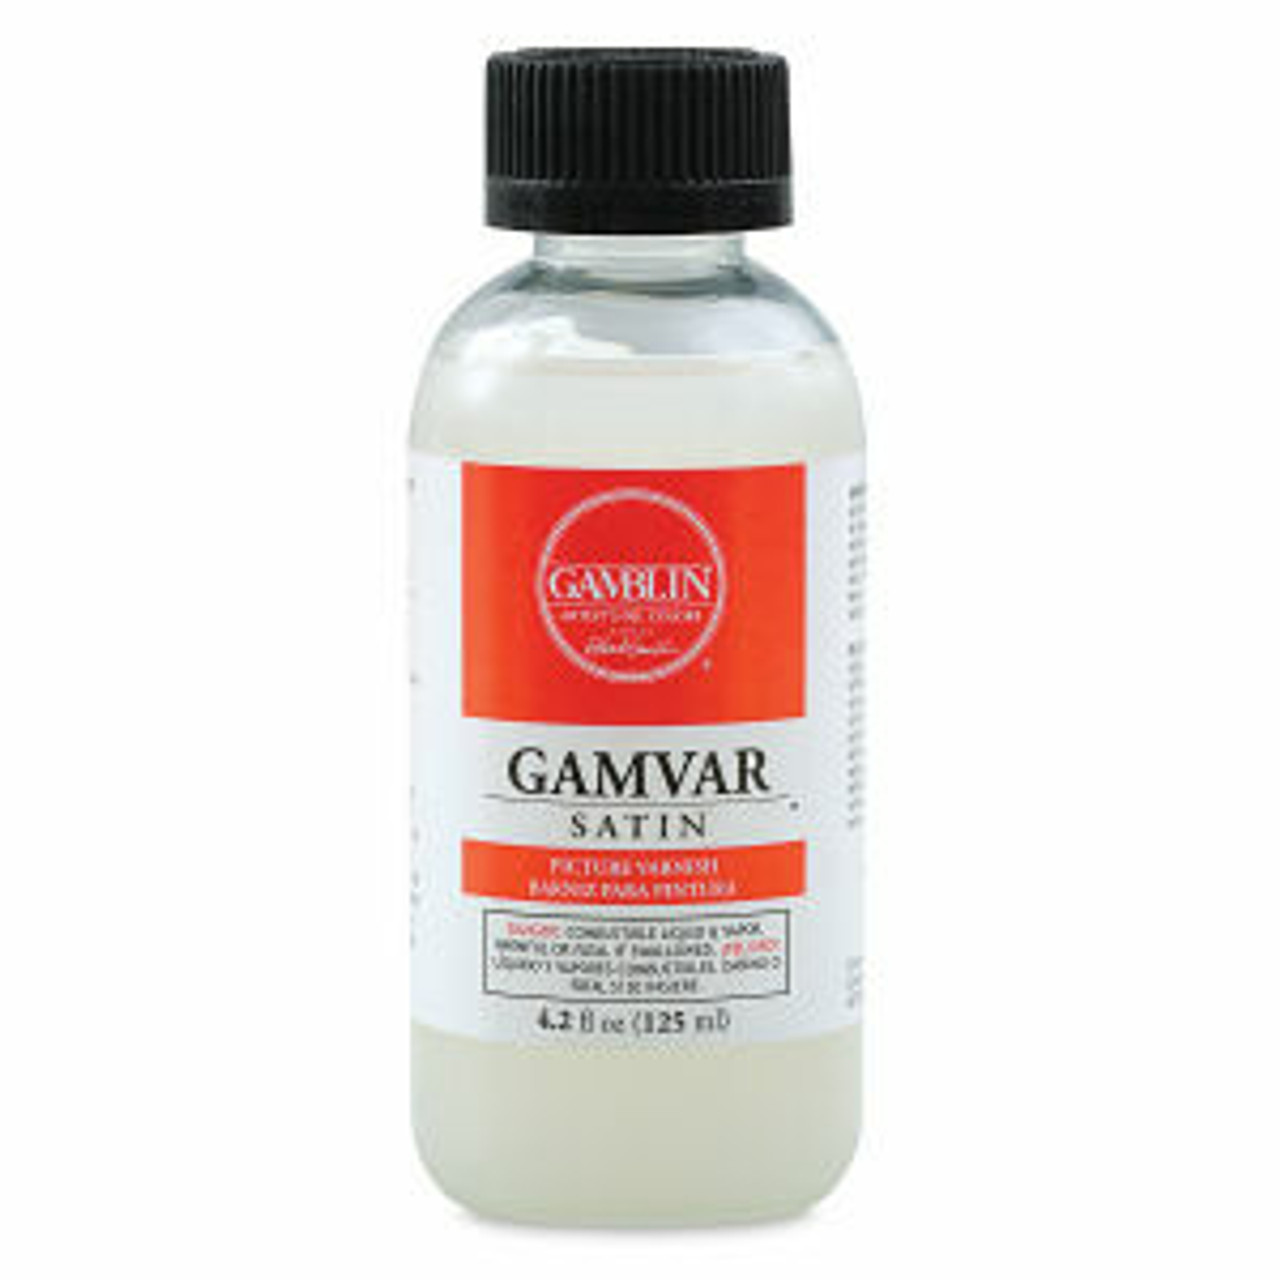 Gamblin - Gamvar Picture Varnish - Gloss - 4.2 oz.